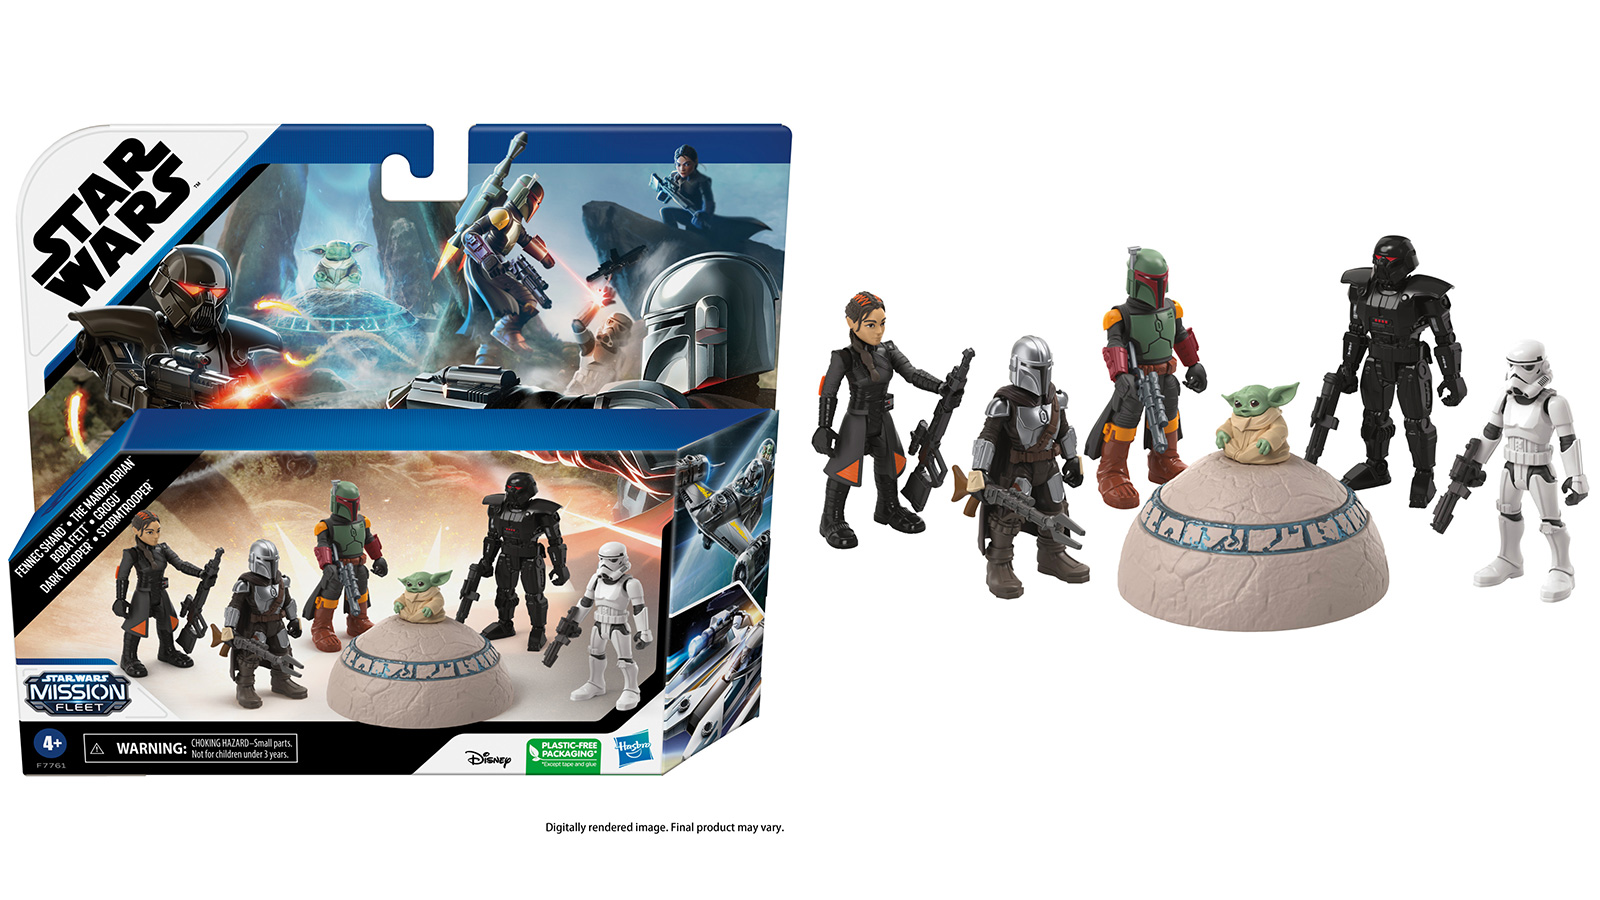 Hasbro Press Release - Amazon Exclusive Mission Fleet Protect The Bounty Set